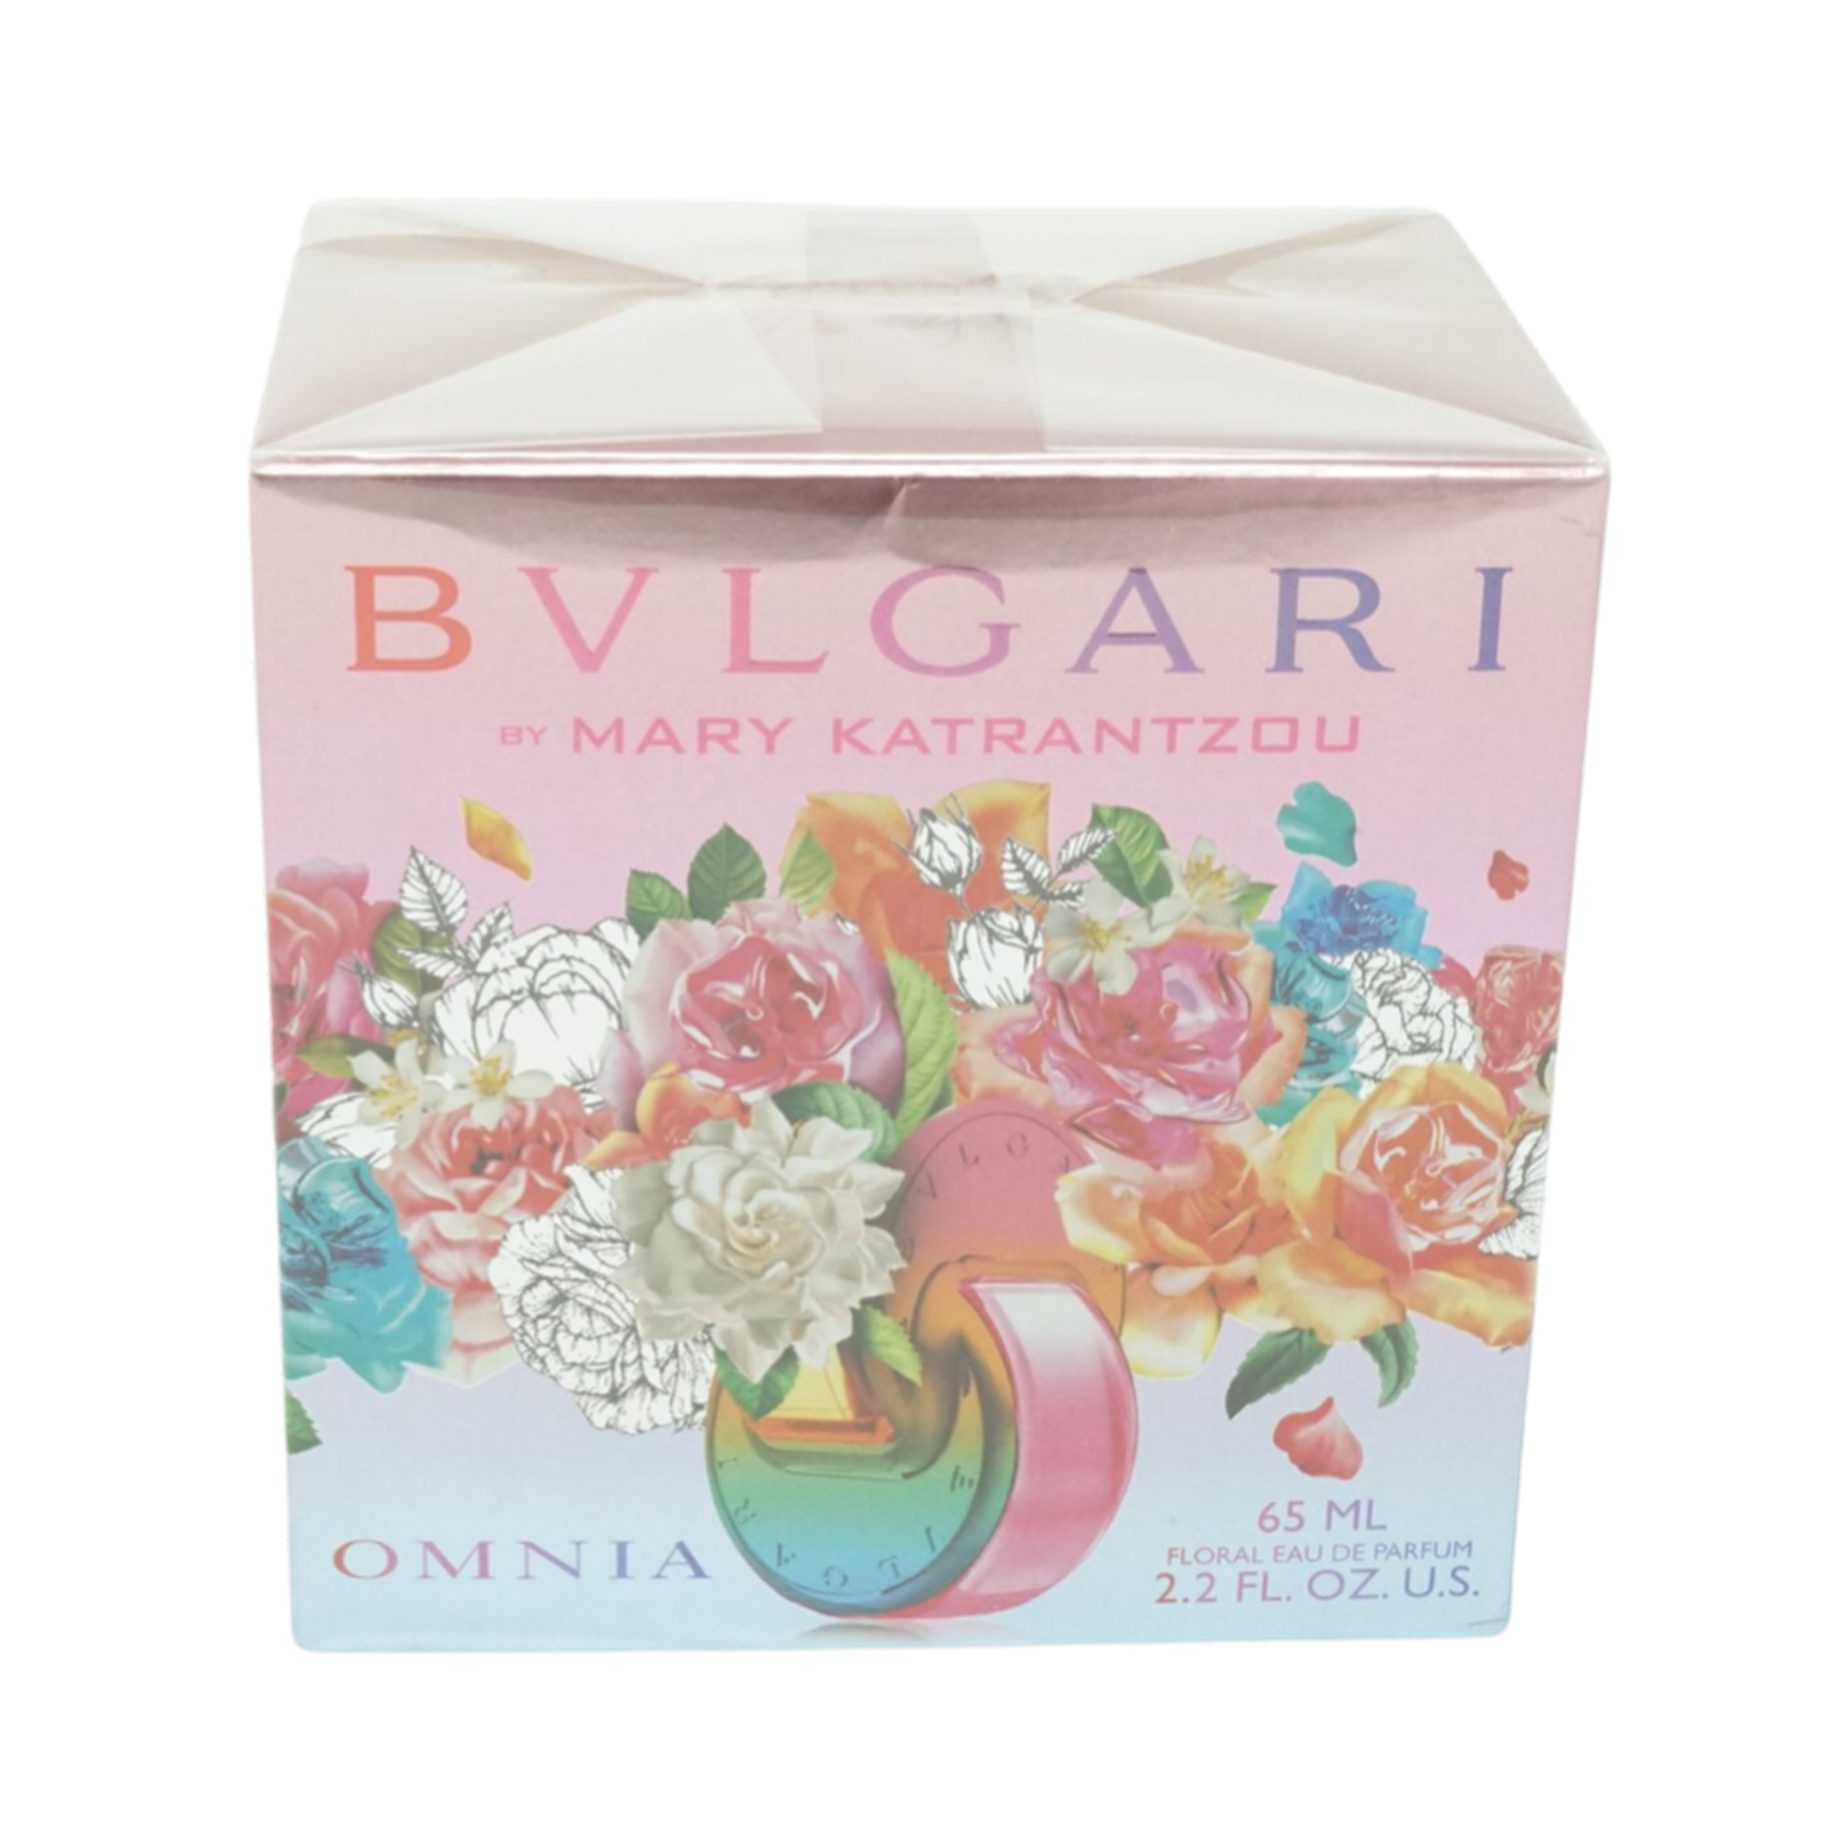 BVLGARI Rouge-Palette Bvlgari by Mary Katrantzou Omnia Floral de Parfum 65 ml